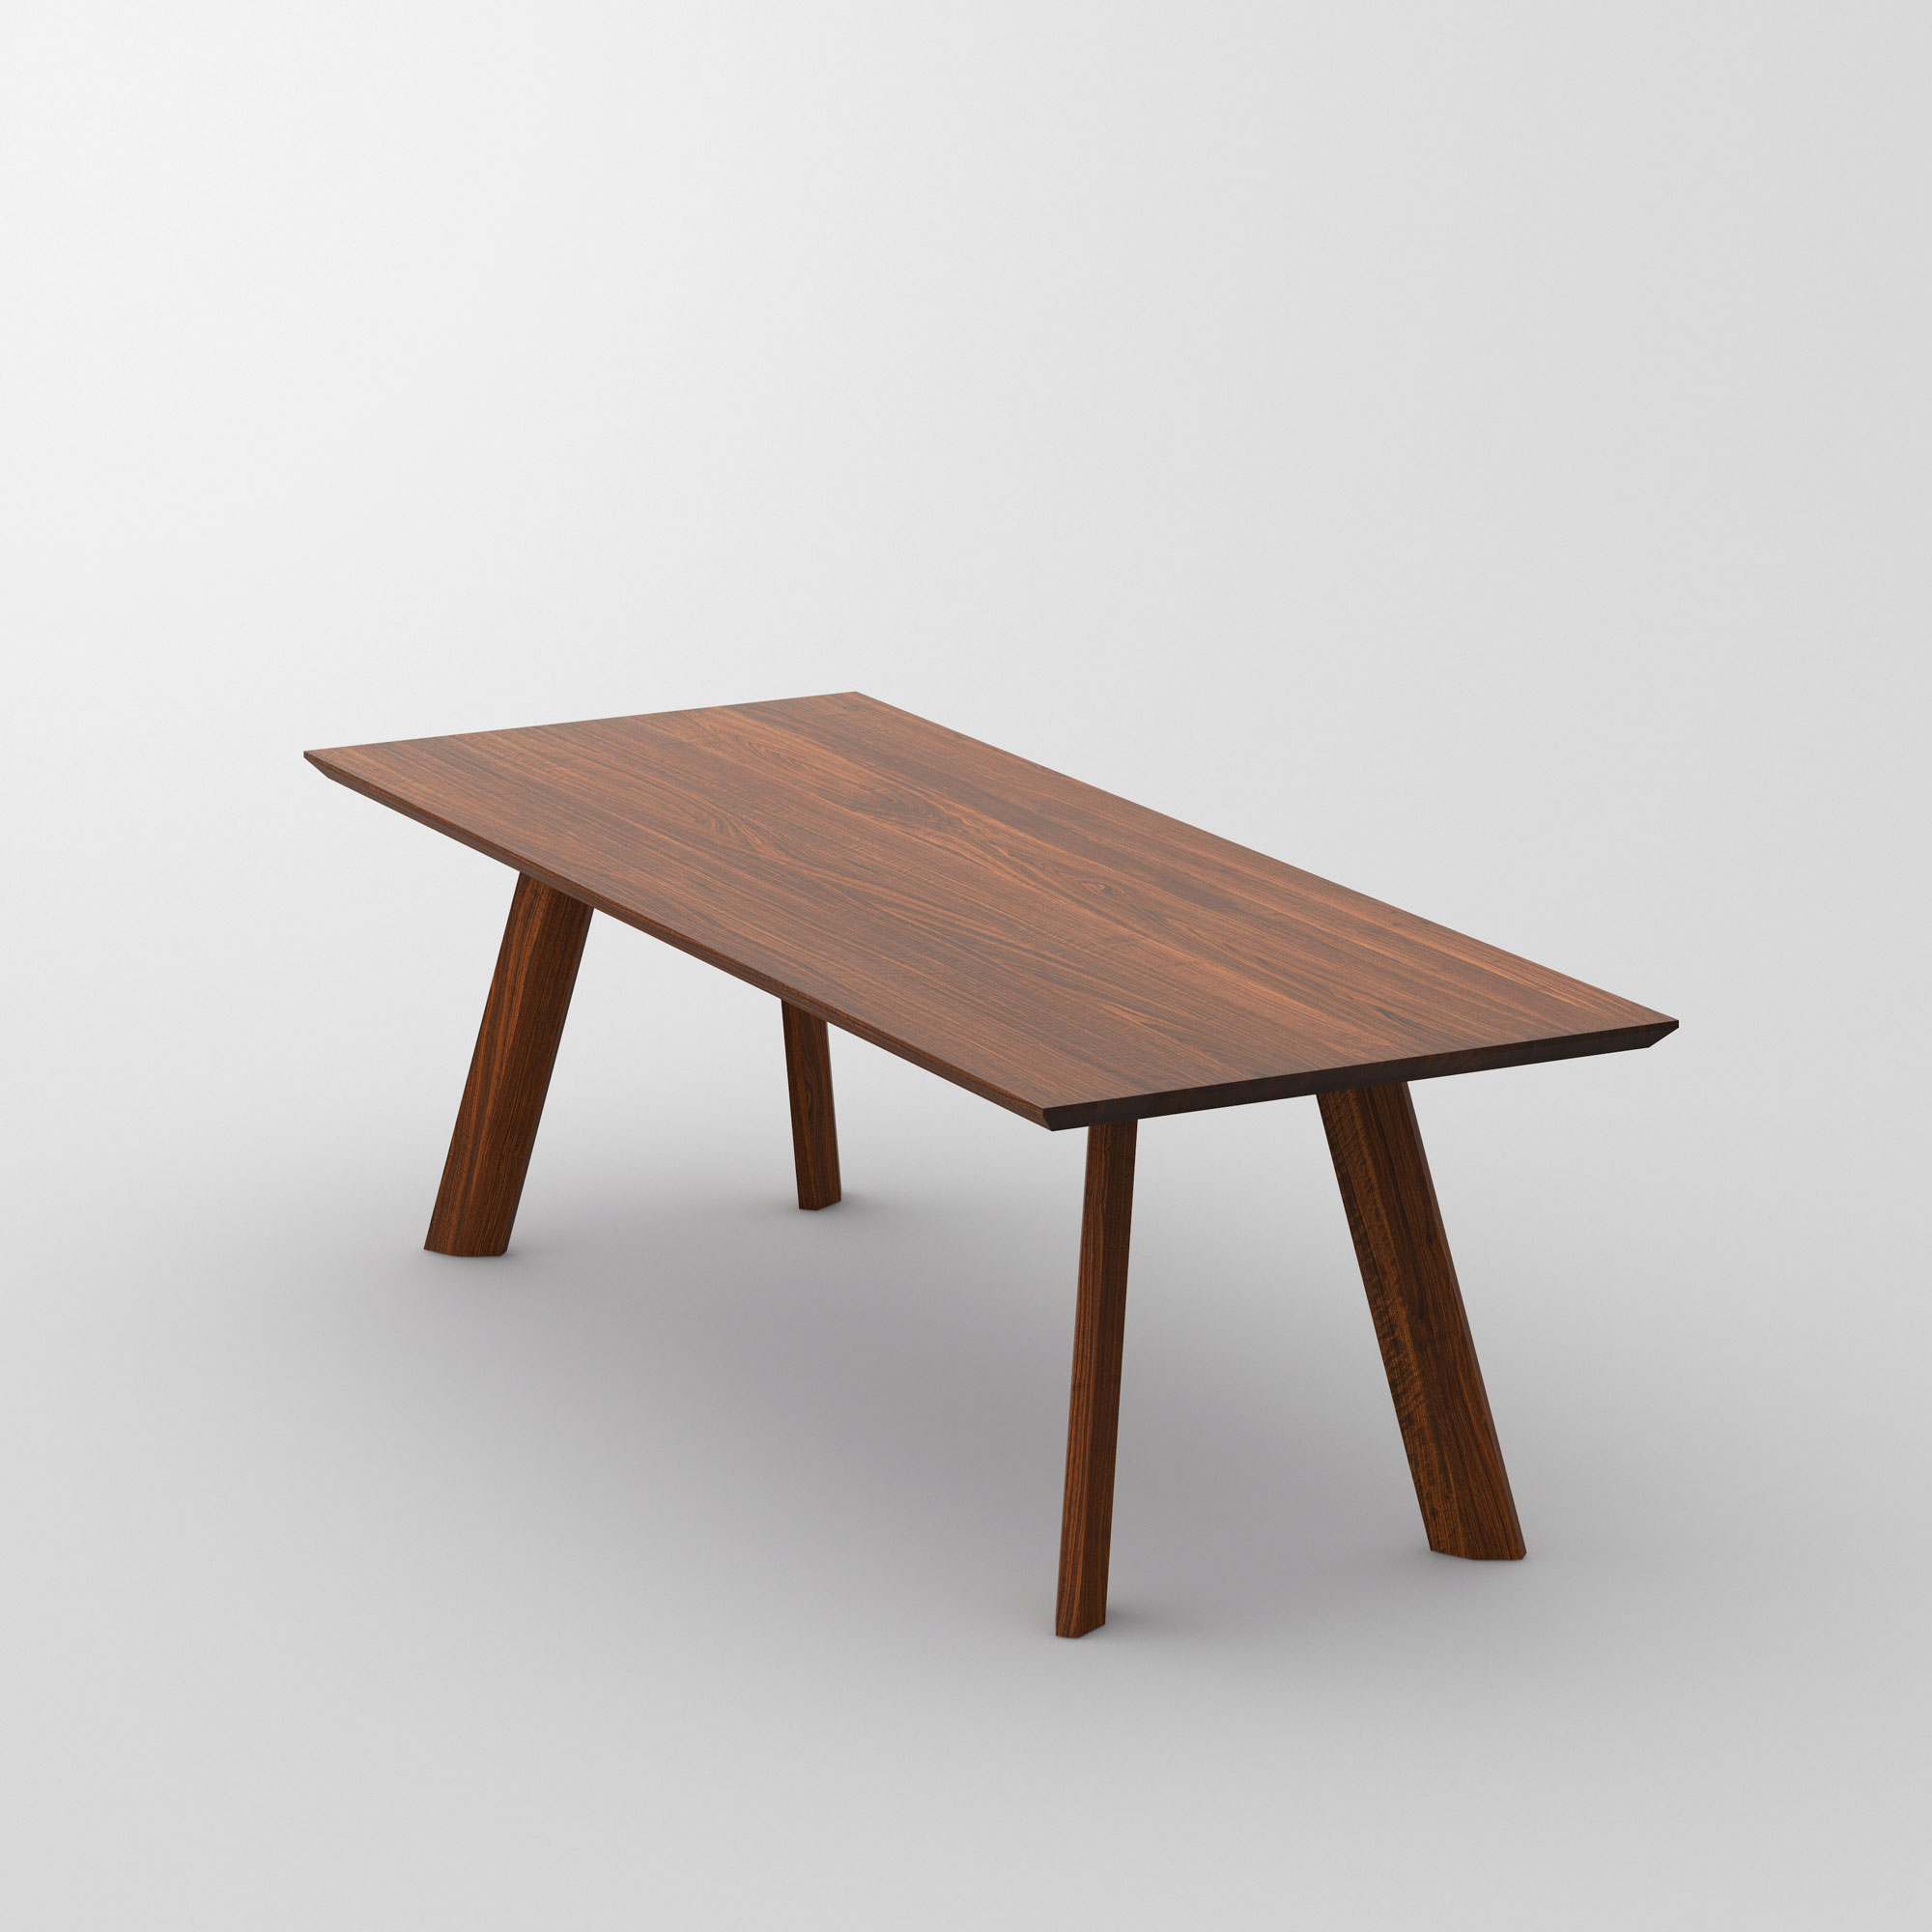 Designer Living Room Table RHOMBI BASIC cam2 custom made in solid wood by vitamin design